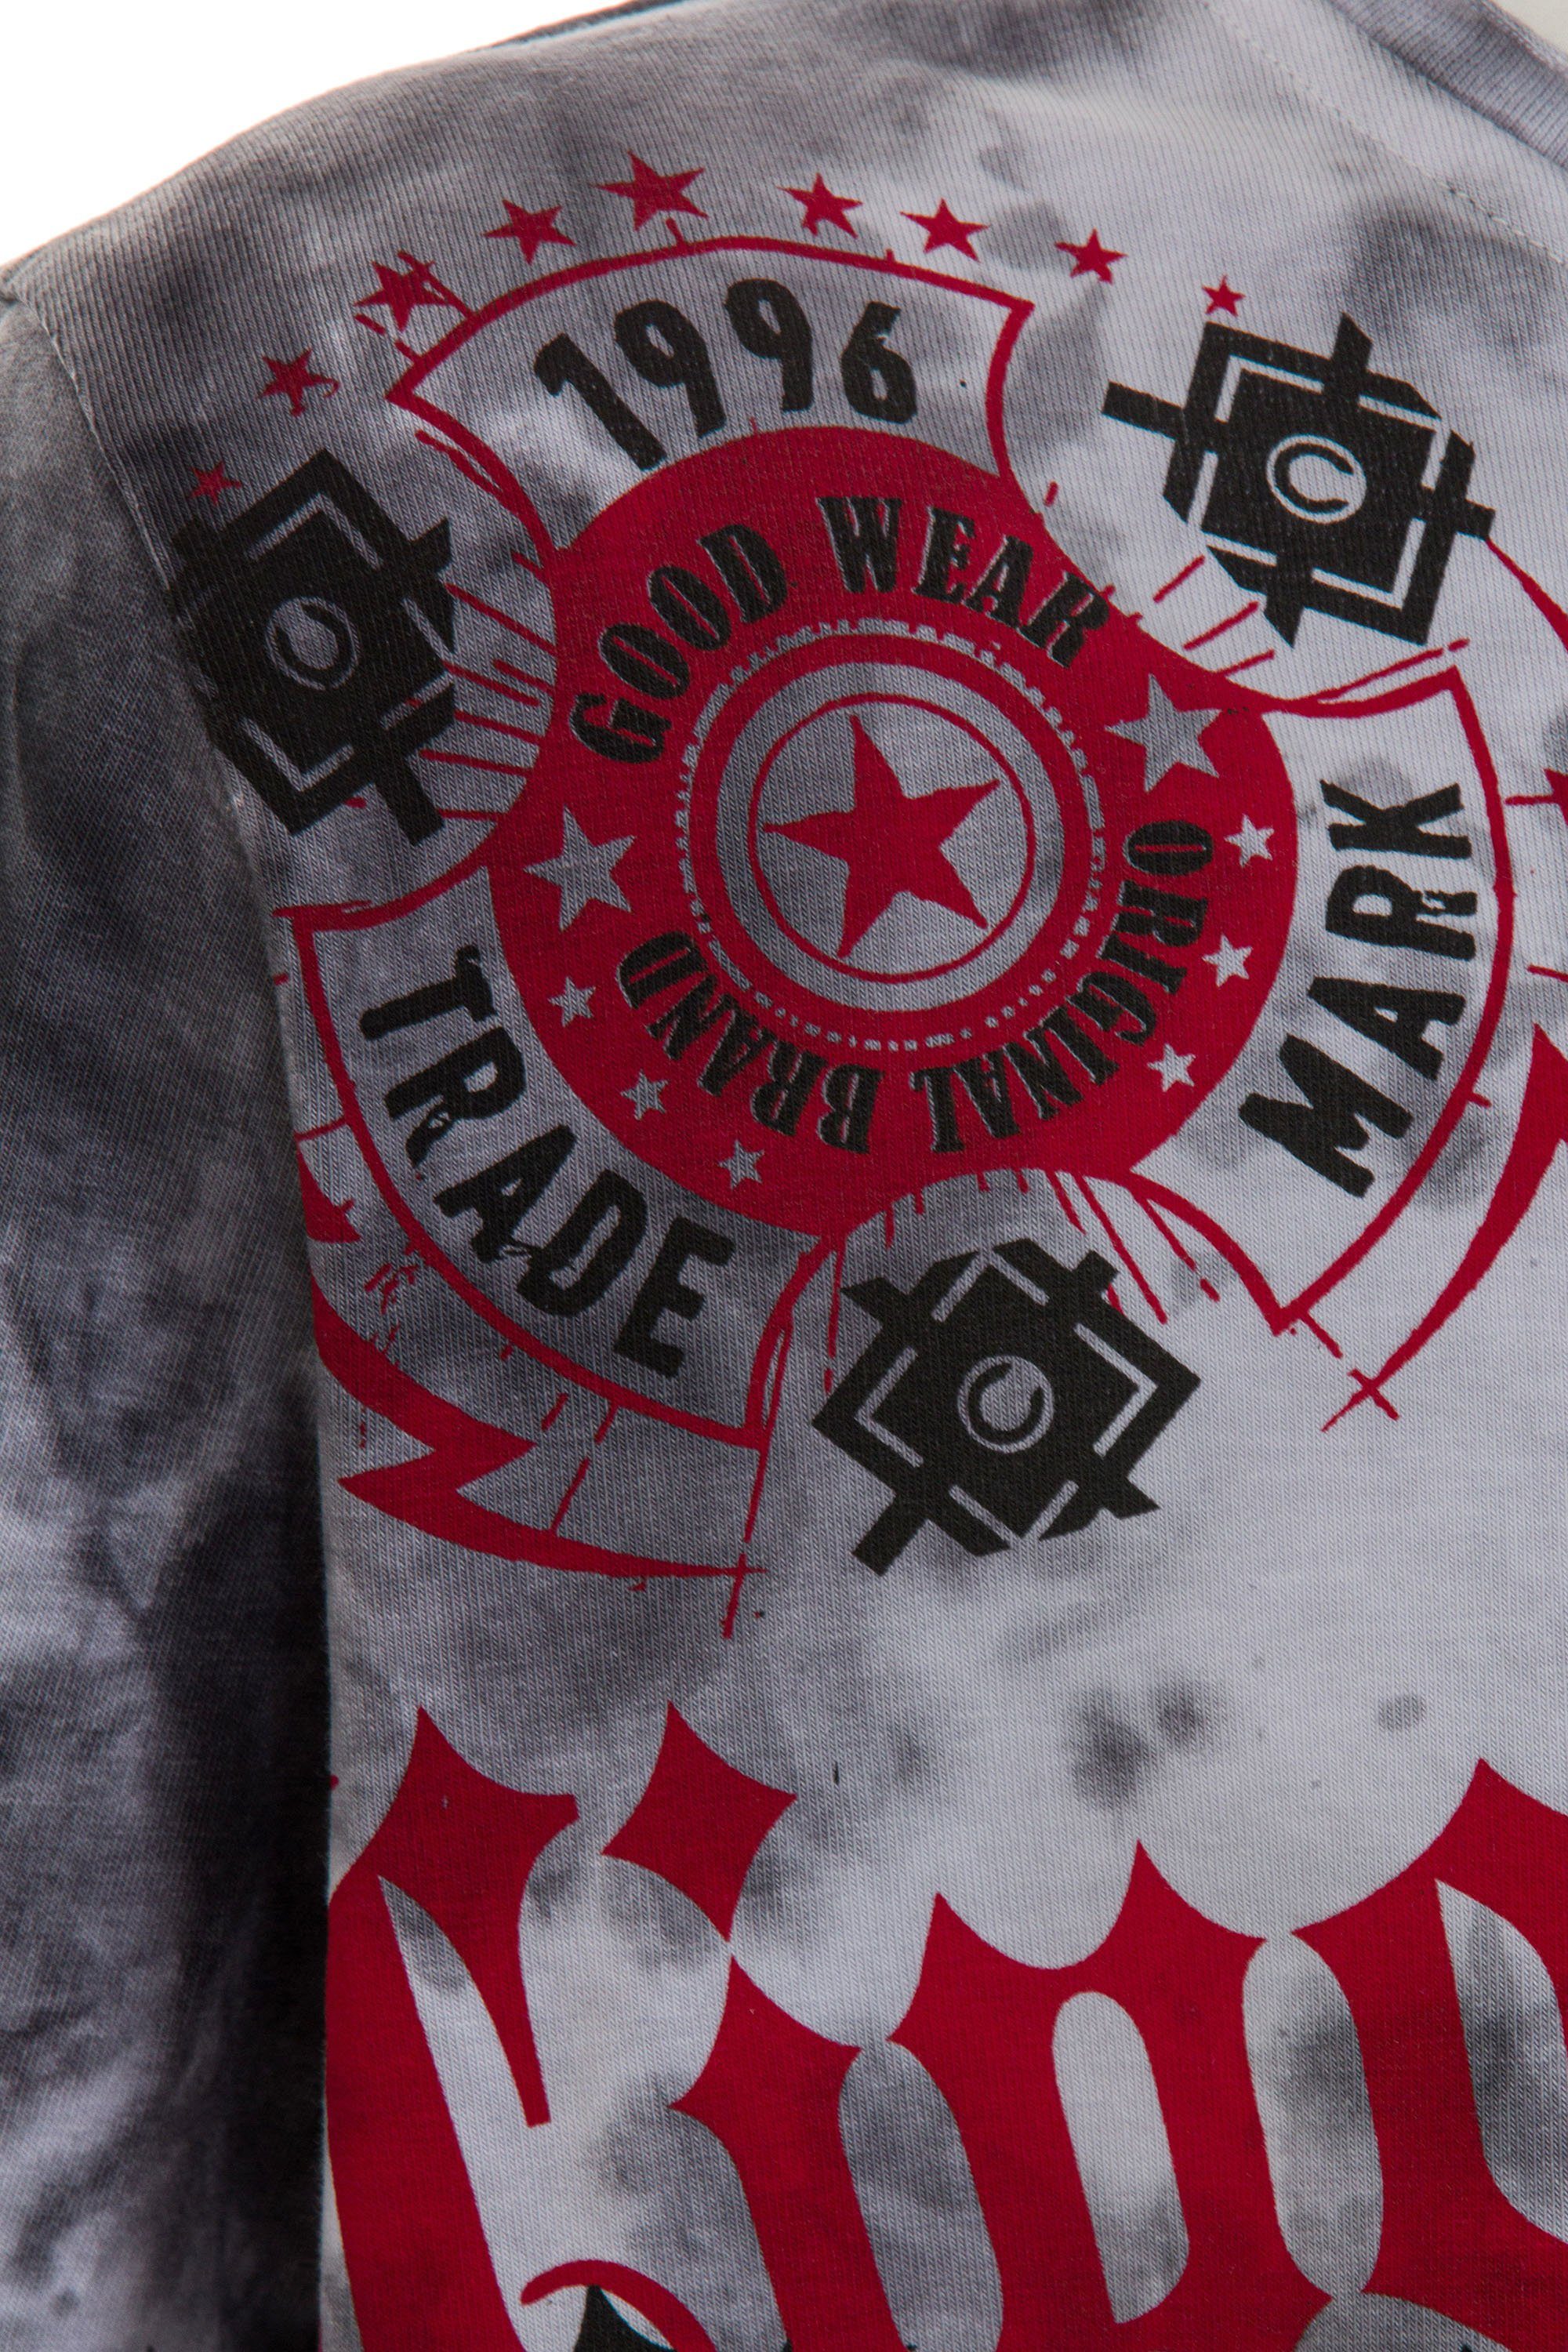 T-Shirt Baxx anthrazit mit & Markenprint Cipo großflächigem